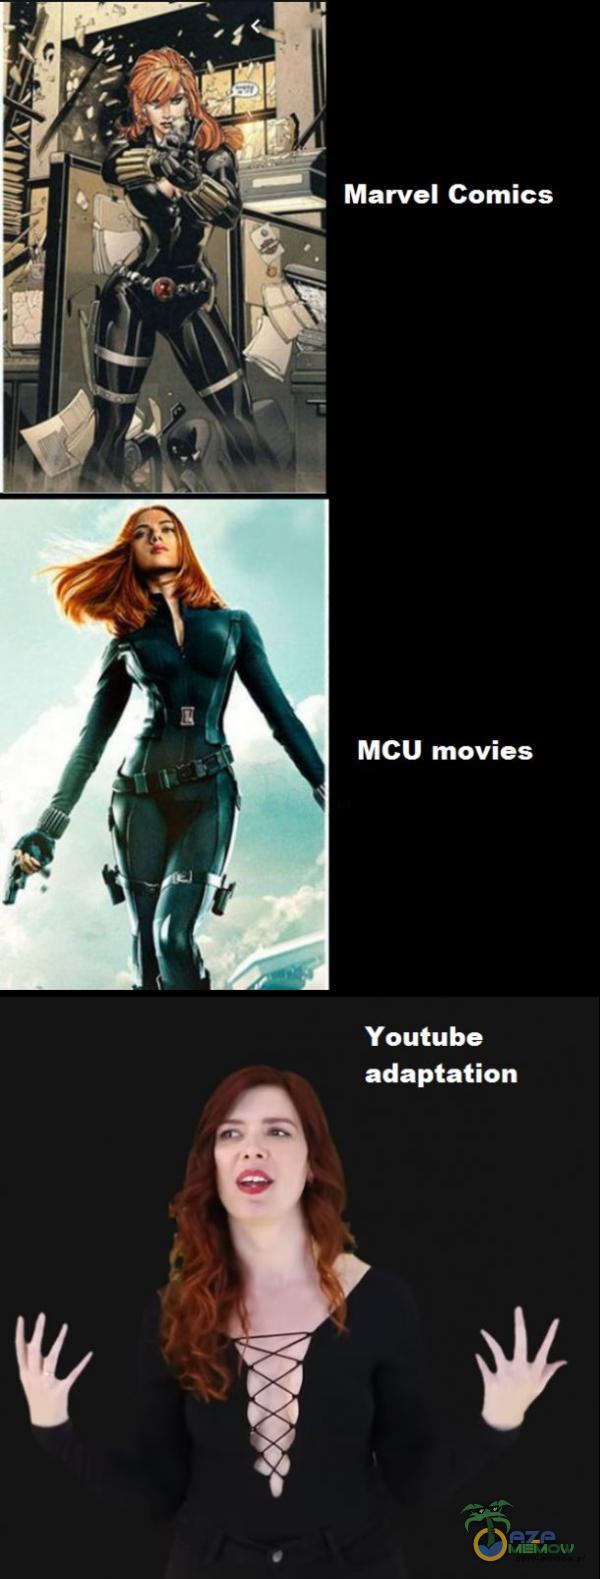 Marvel Comics MCU movies Youtube adaptation